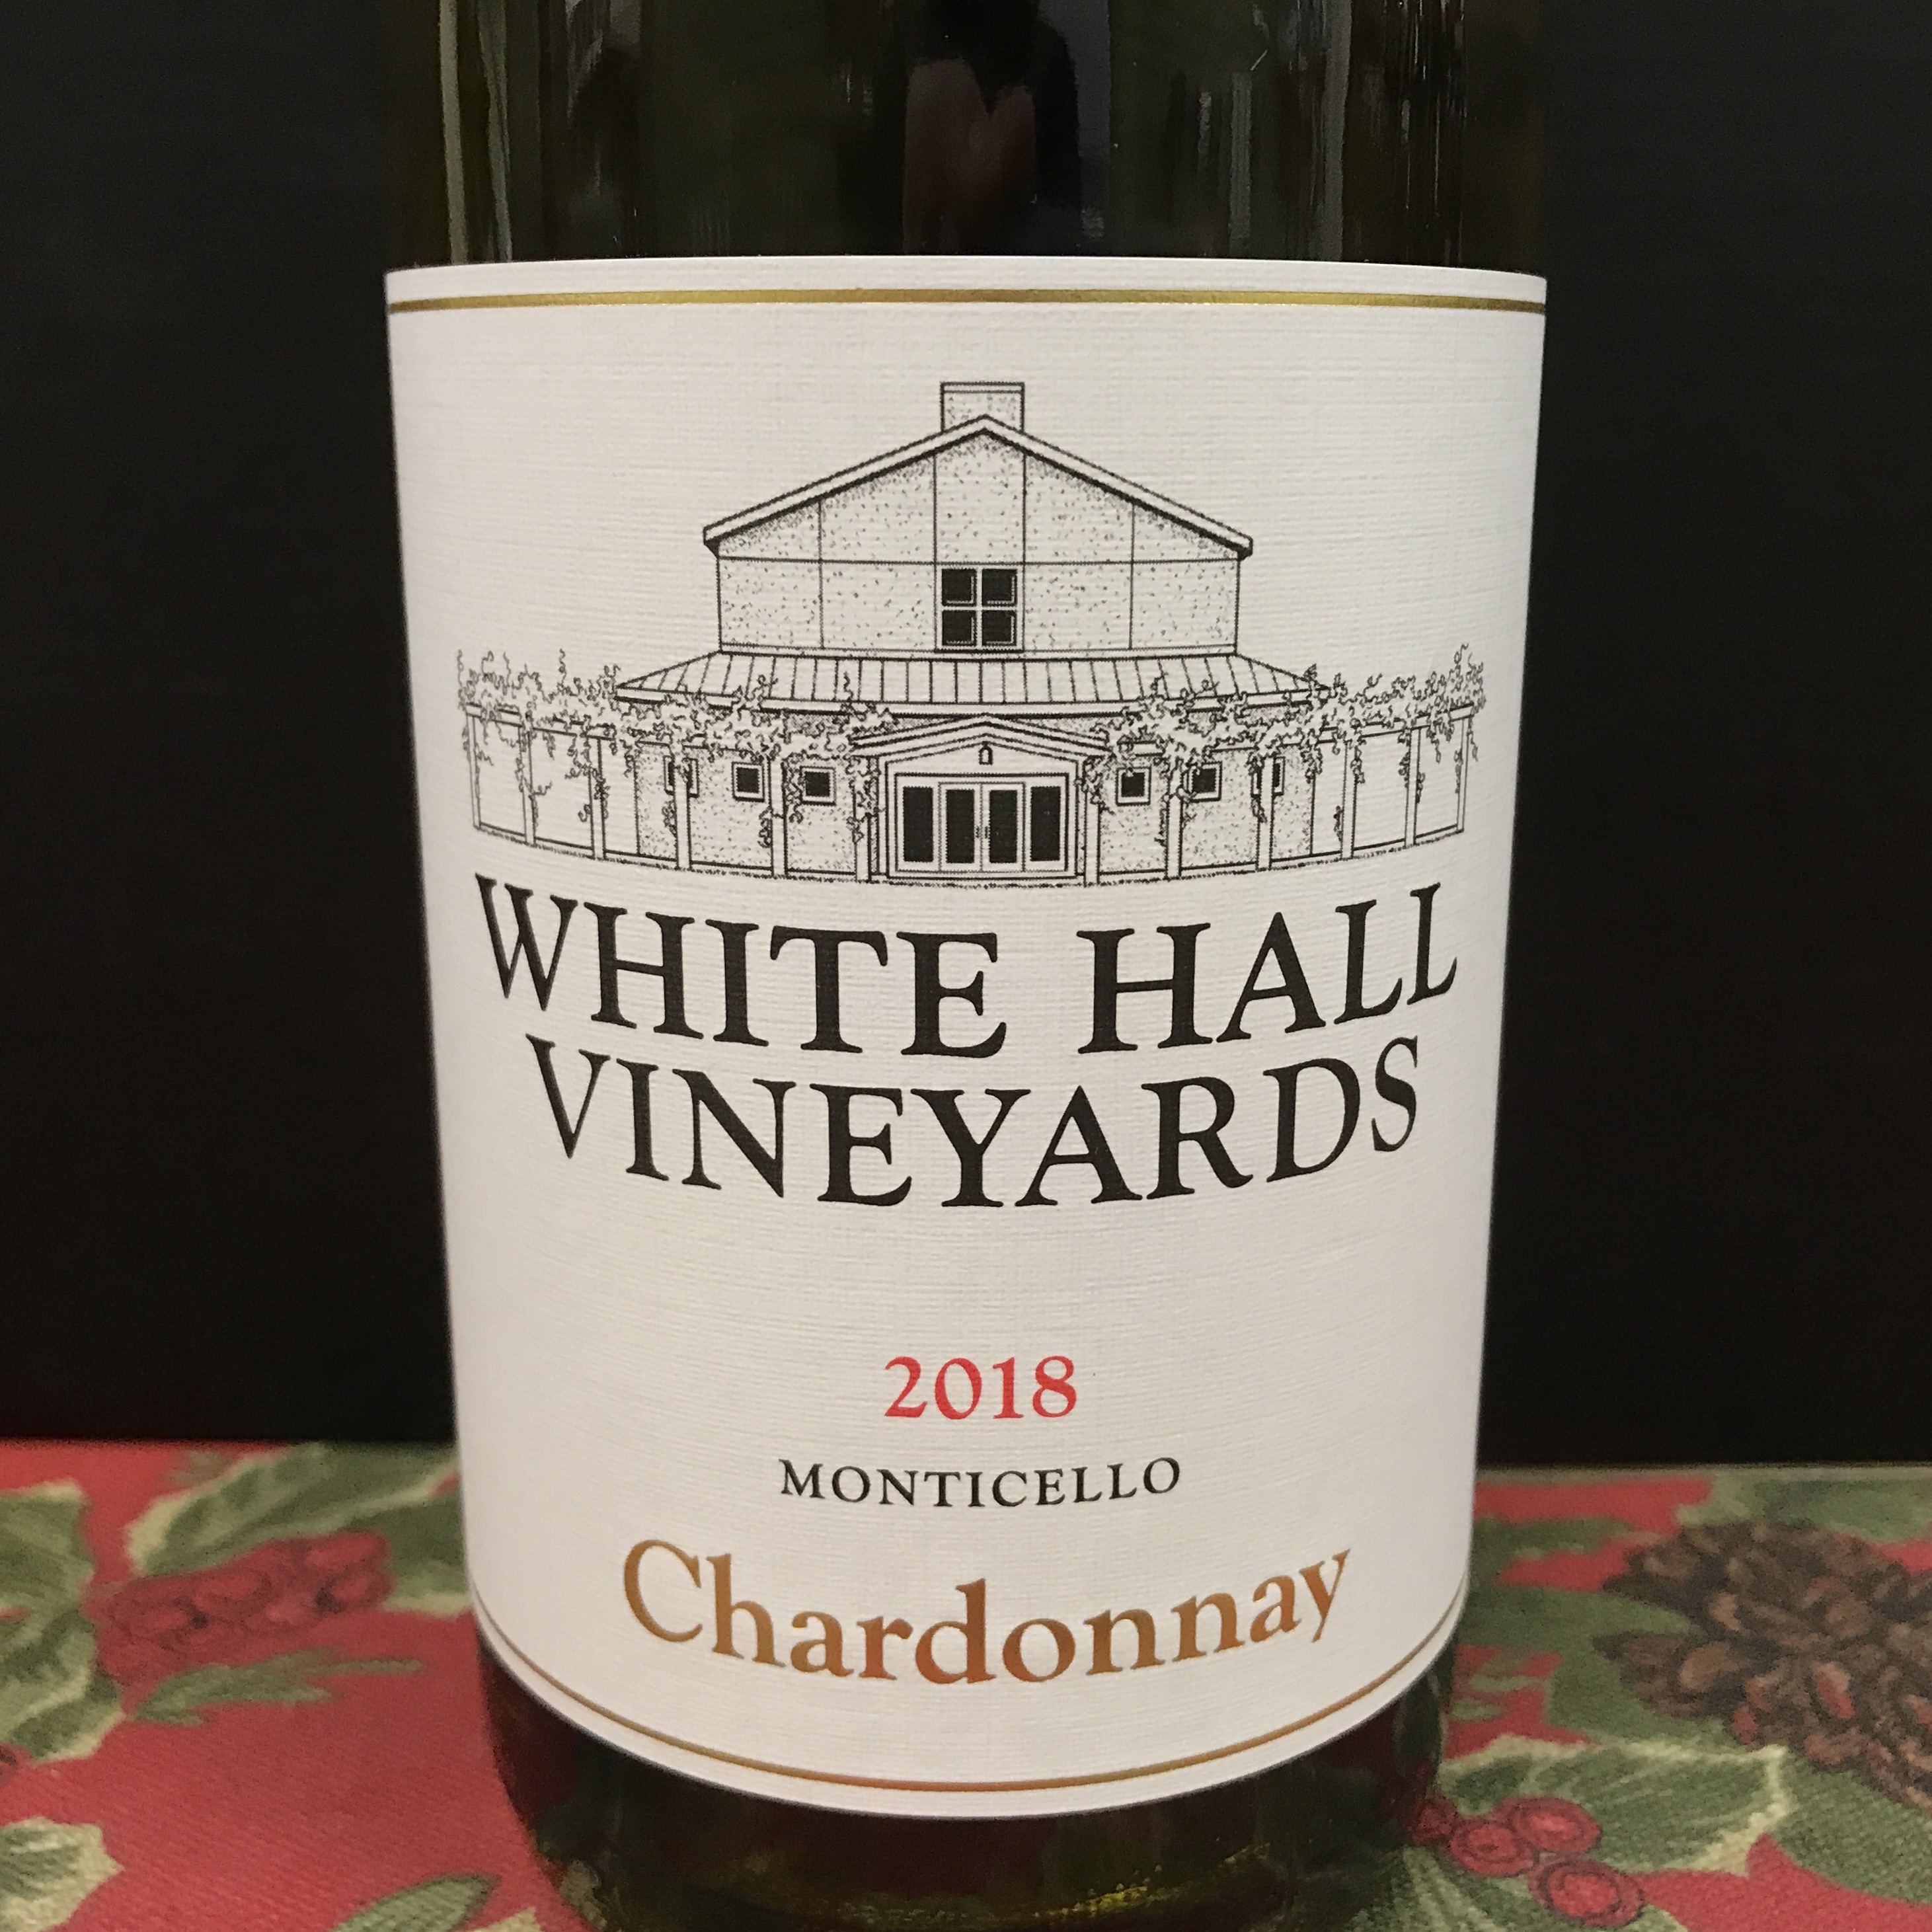 White Hall Vineyards Chardonnay Monticello 2018